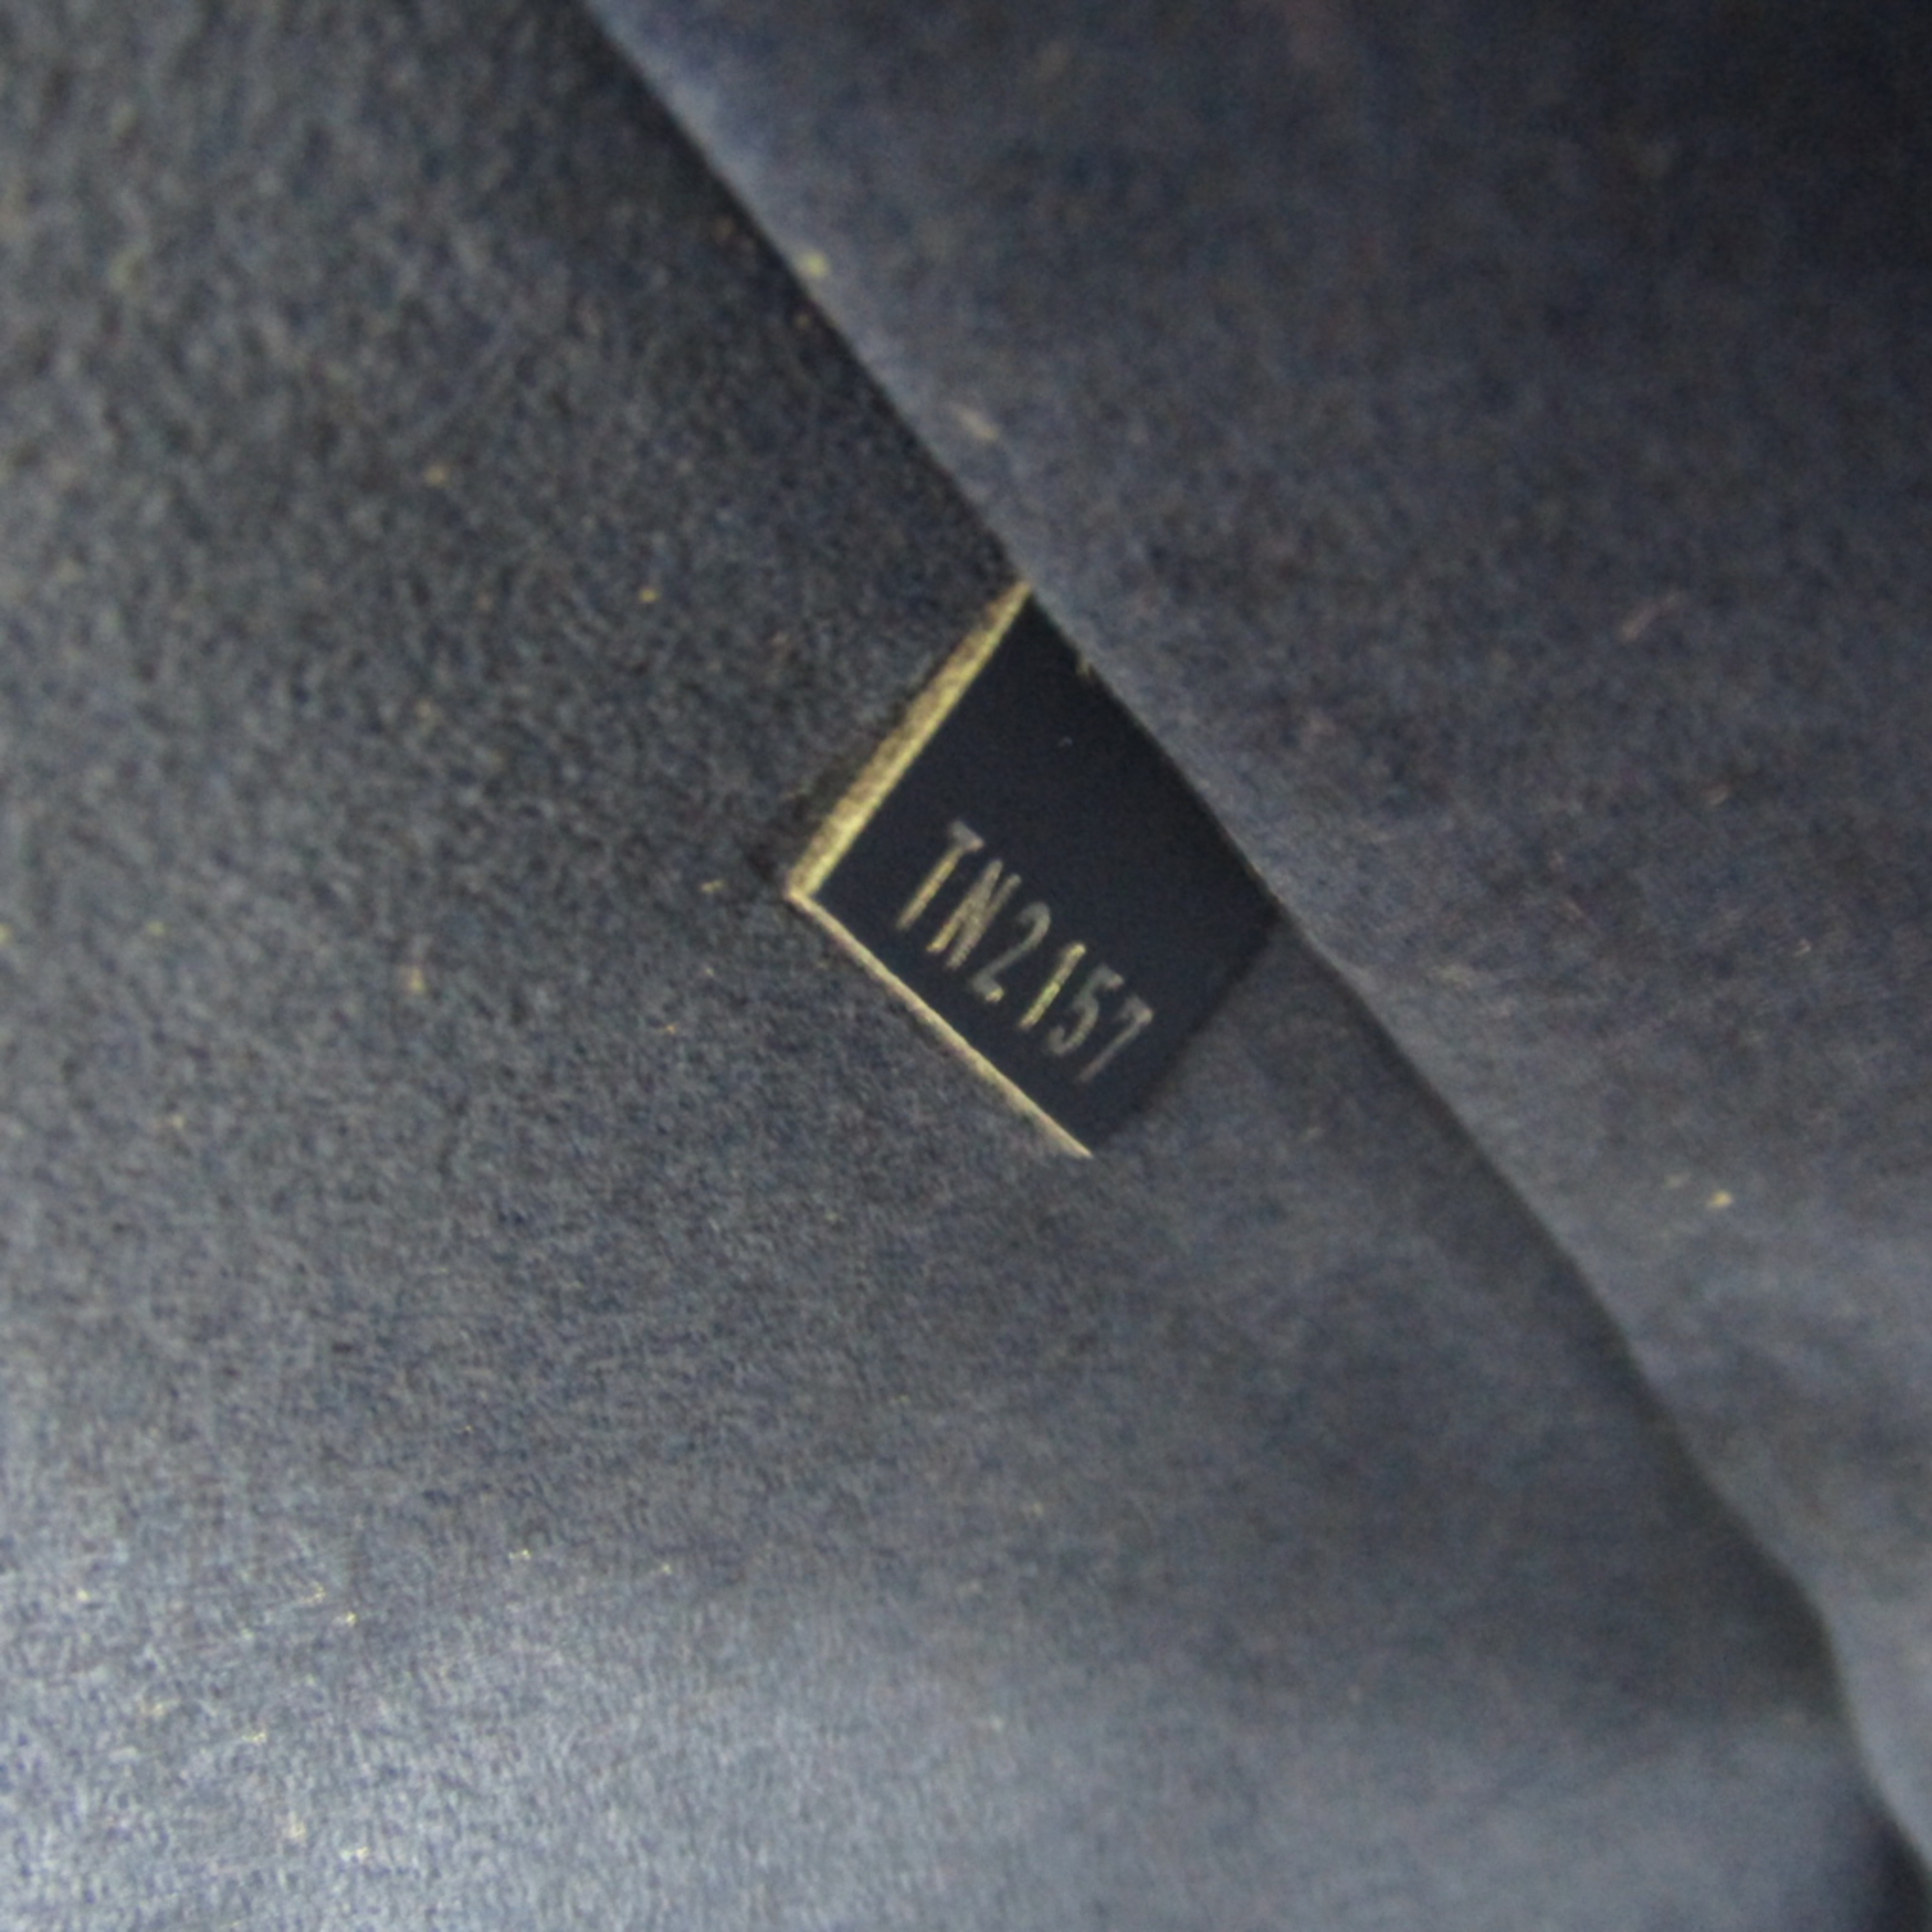 Louis Vuitton Epi Pochette Jules GM Men's Clutch Bag Bleu Celeste